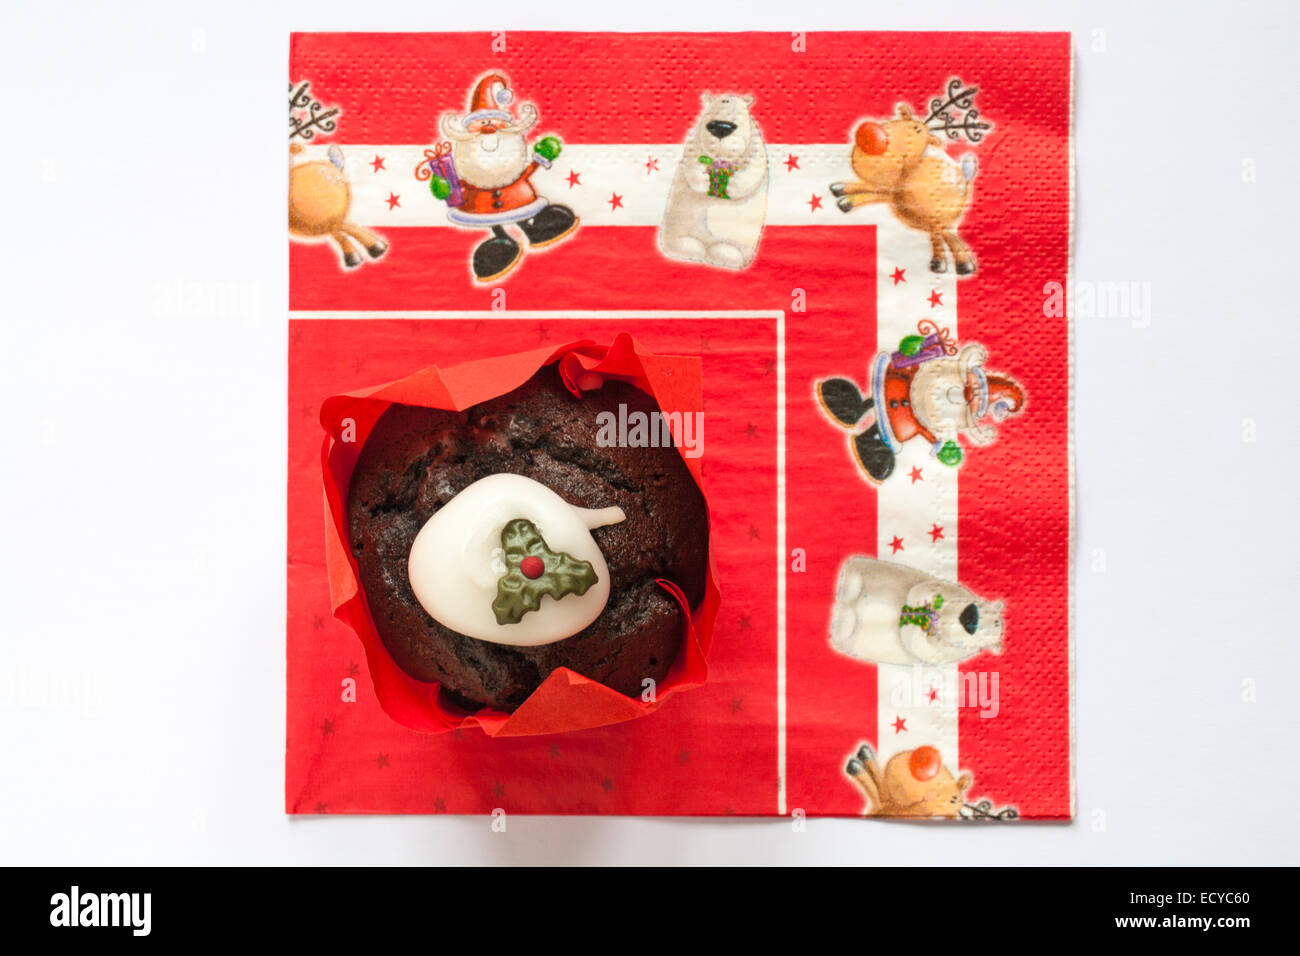 Tesco Merry Christmas Christmas Pudding Muffin on Christmas serviette Stock Photo